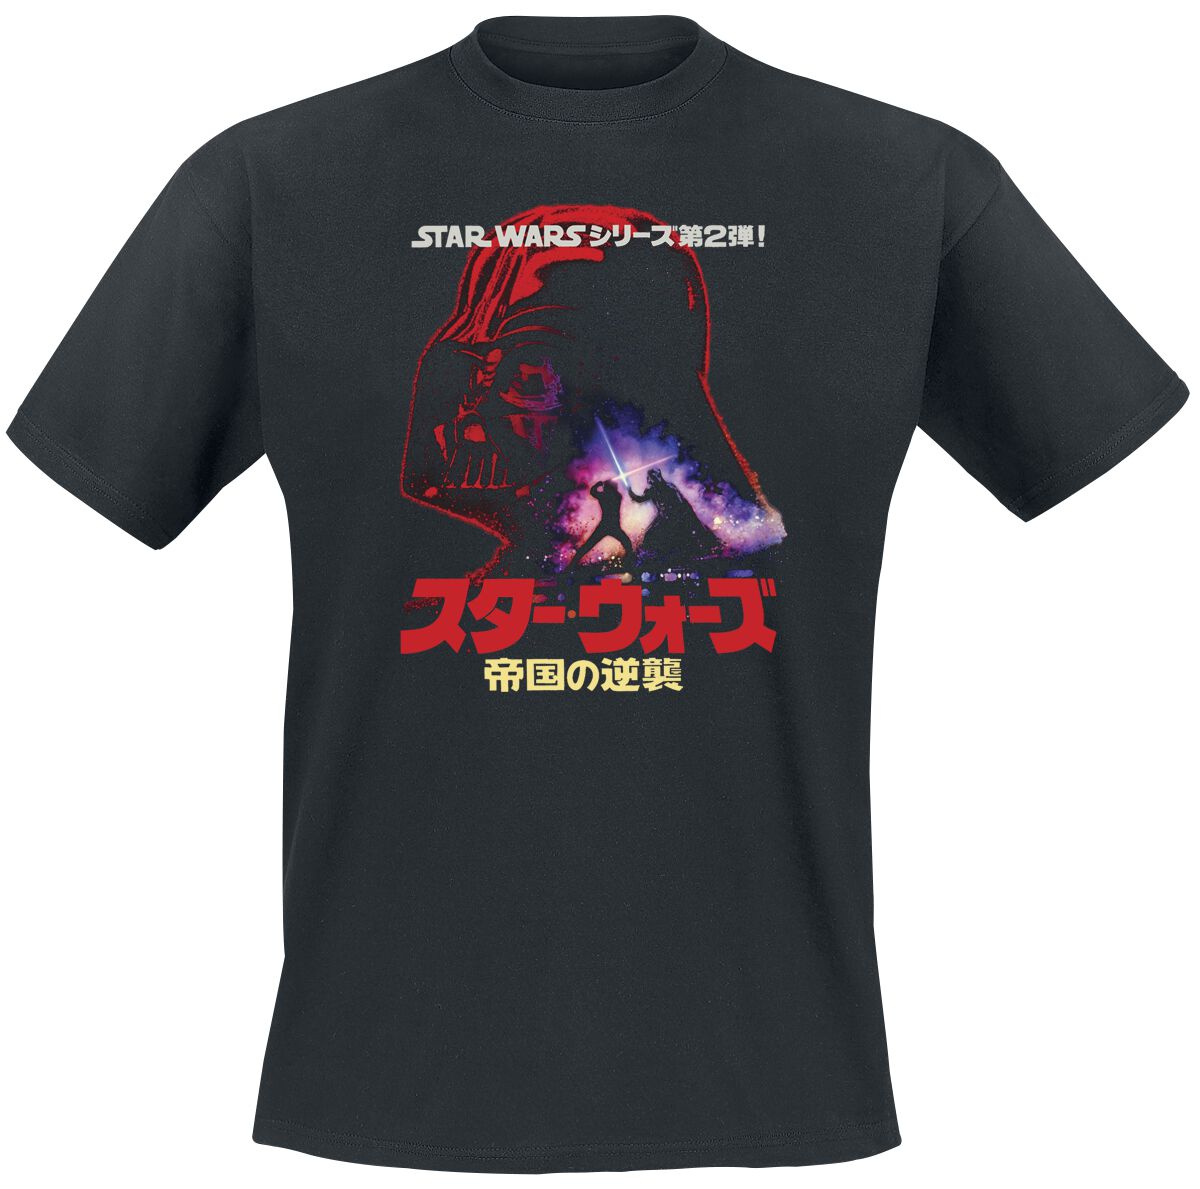 Star Wars Darth Vader - Poster T-Shirt schwarz in L